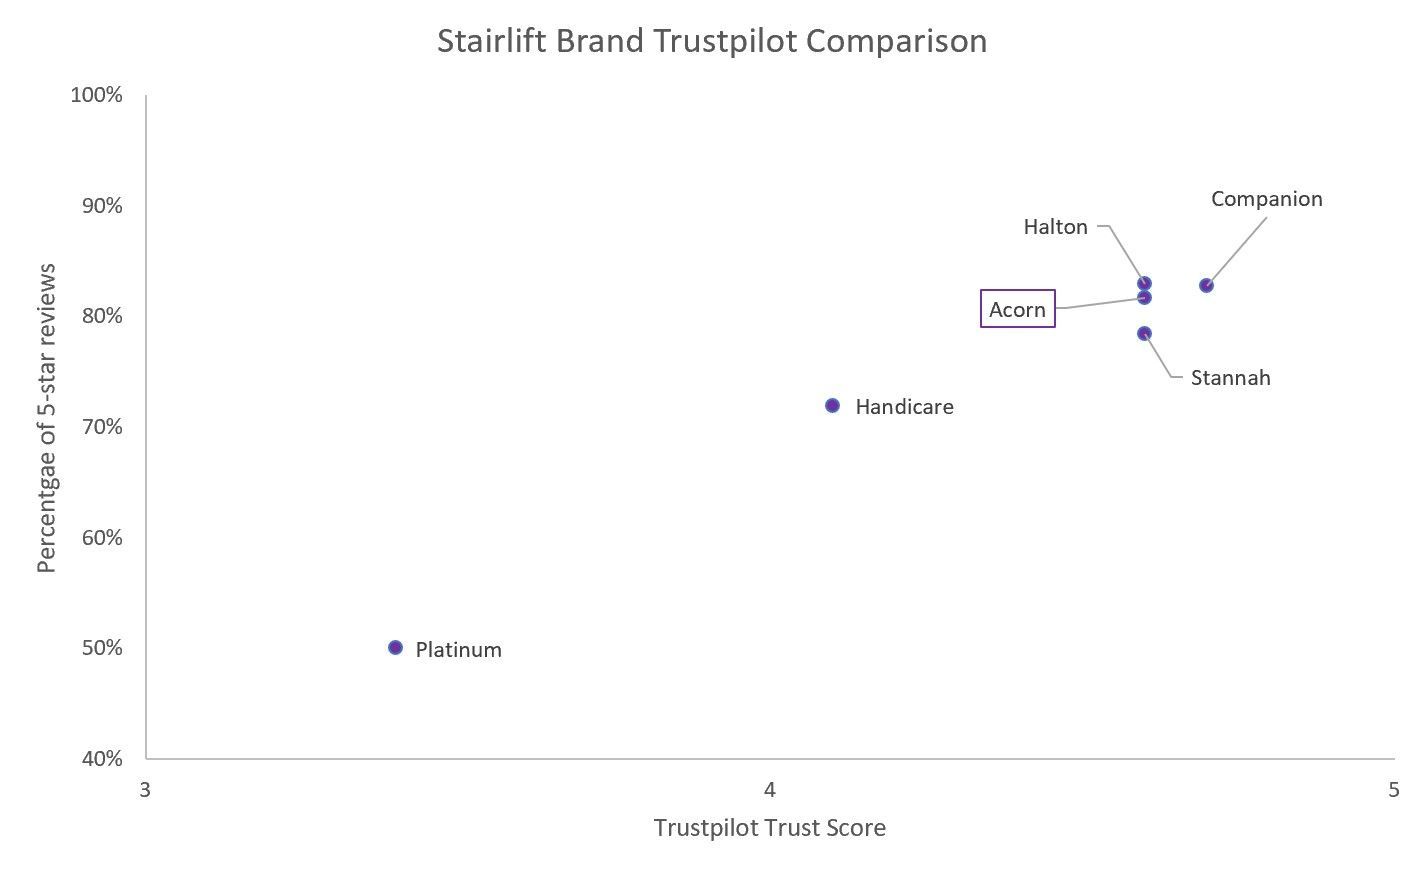 Acorn Trustpilot scores vs competitive set